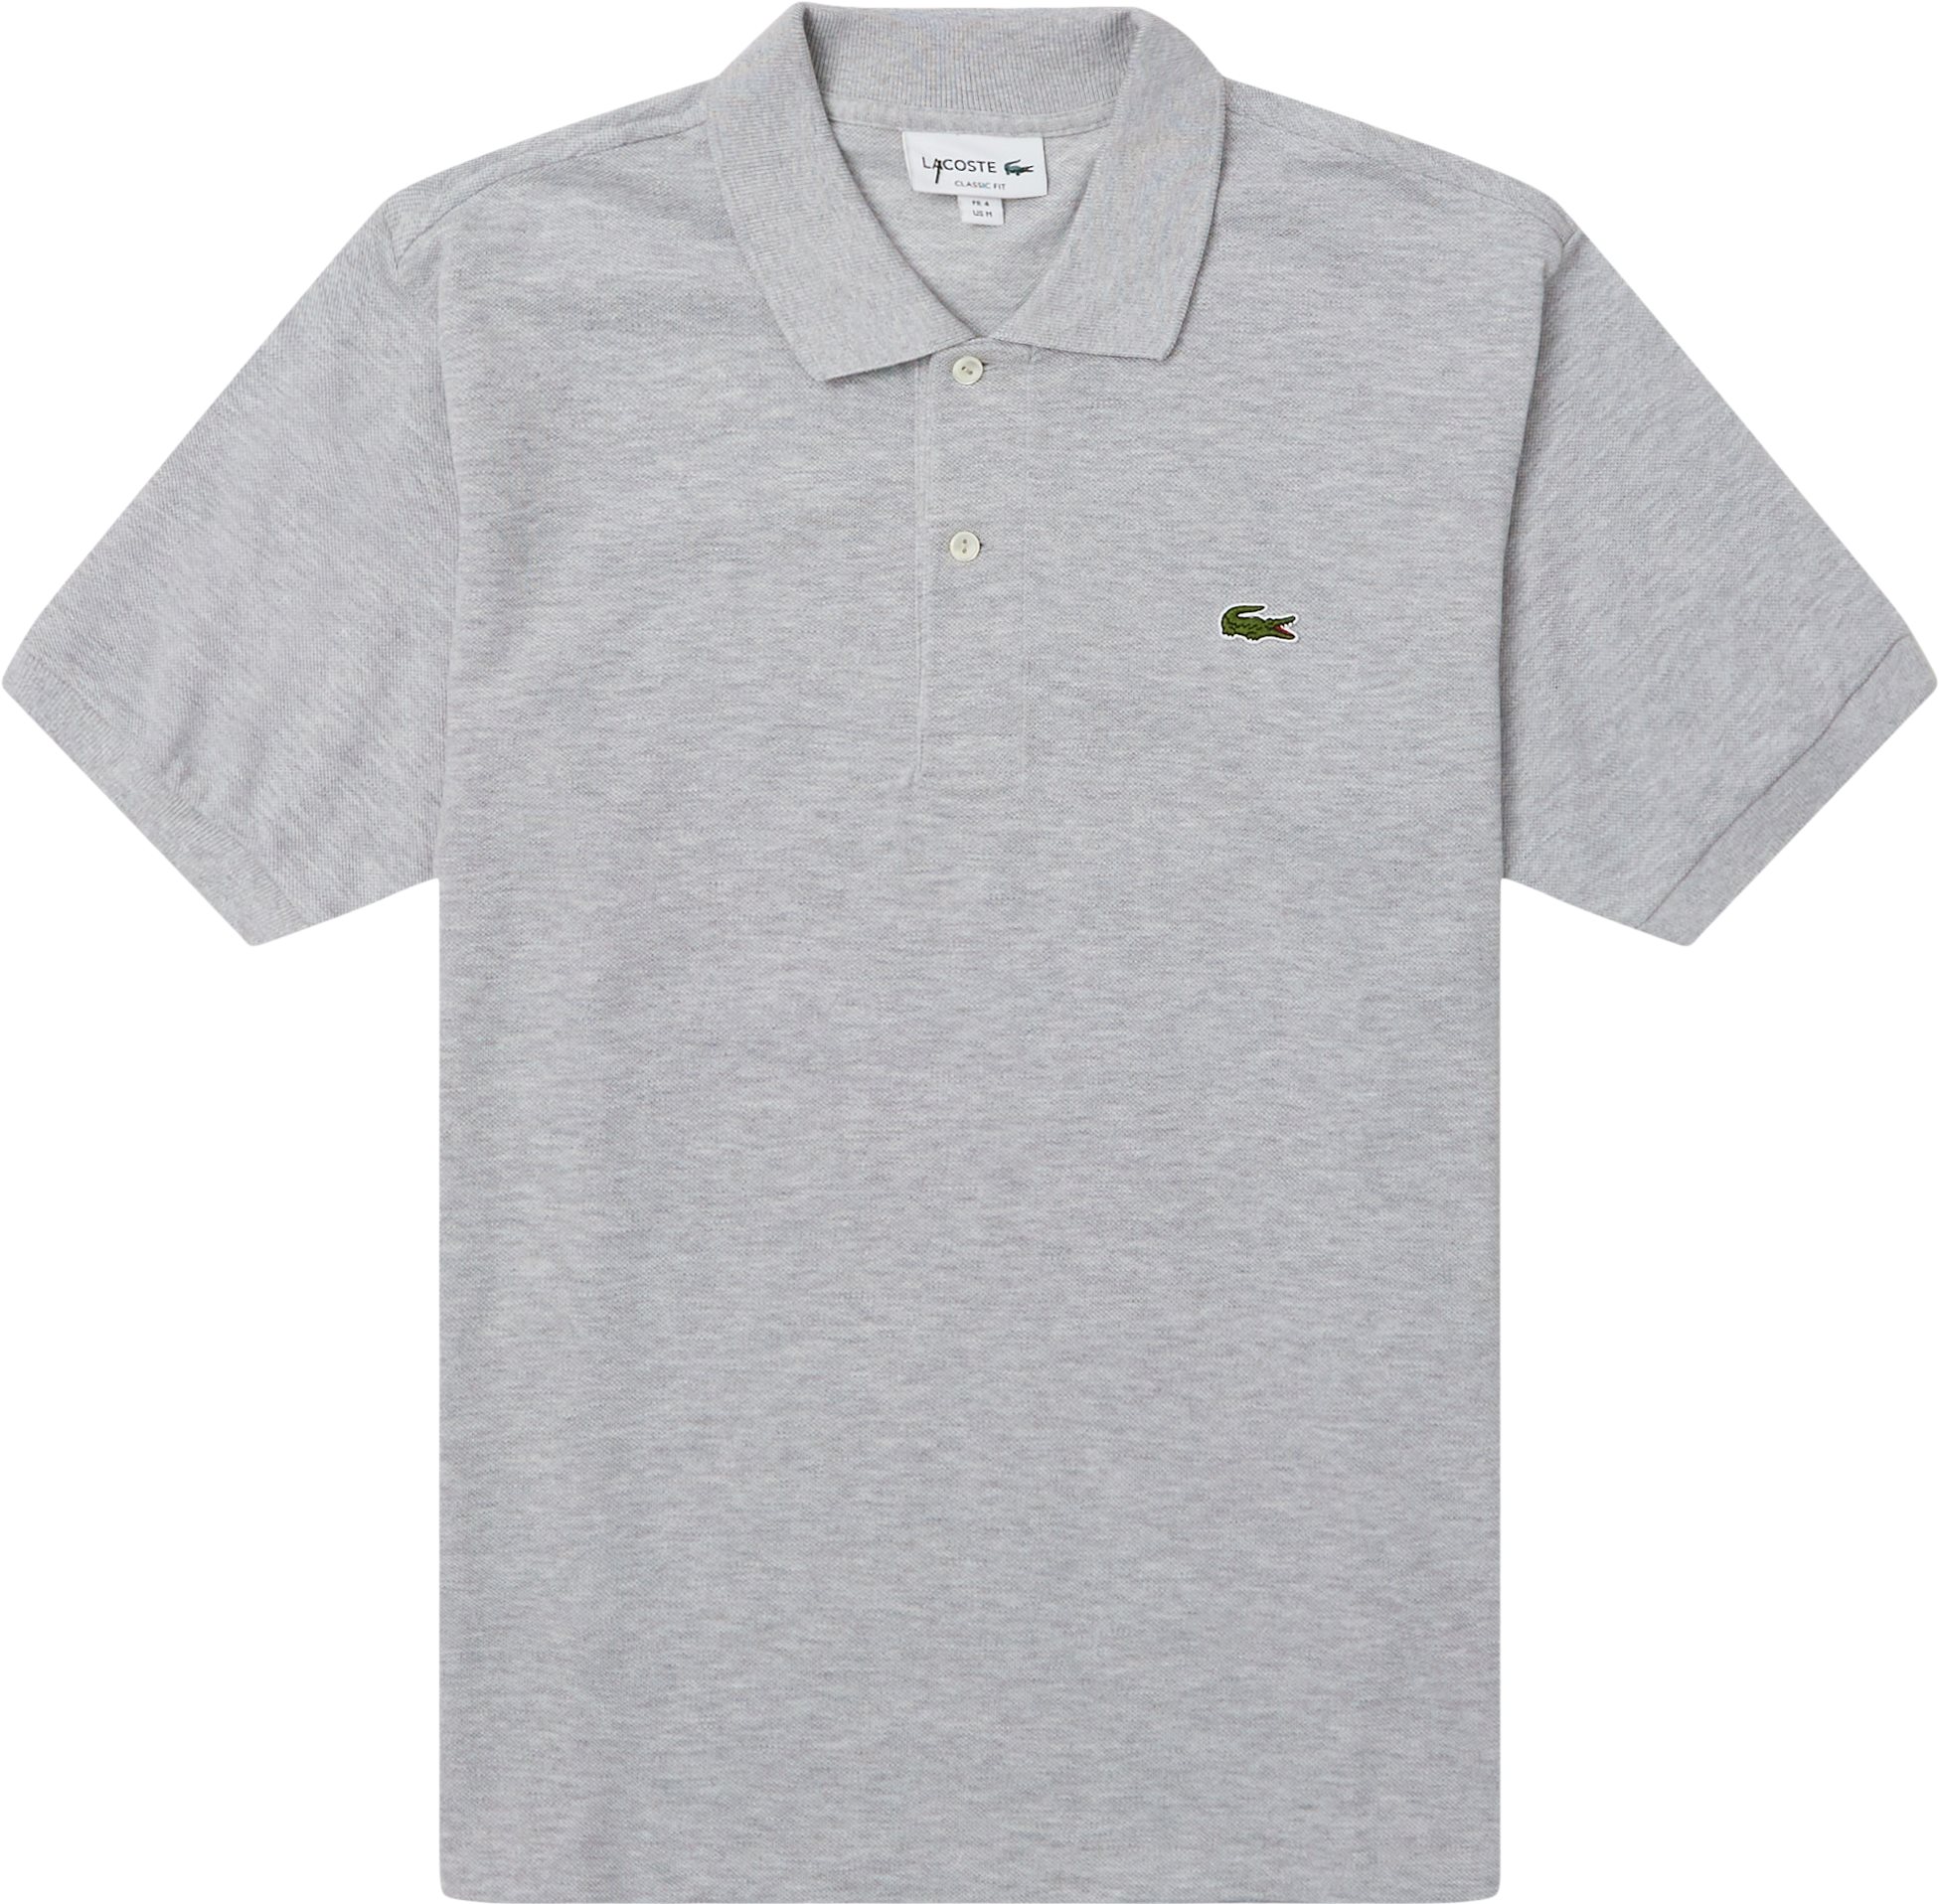 L1264 Polo Tee - T-shirts - Regular fit - Grey